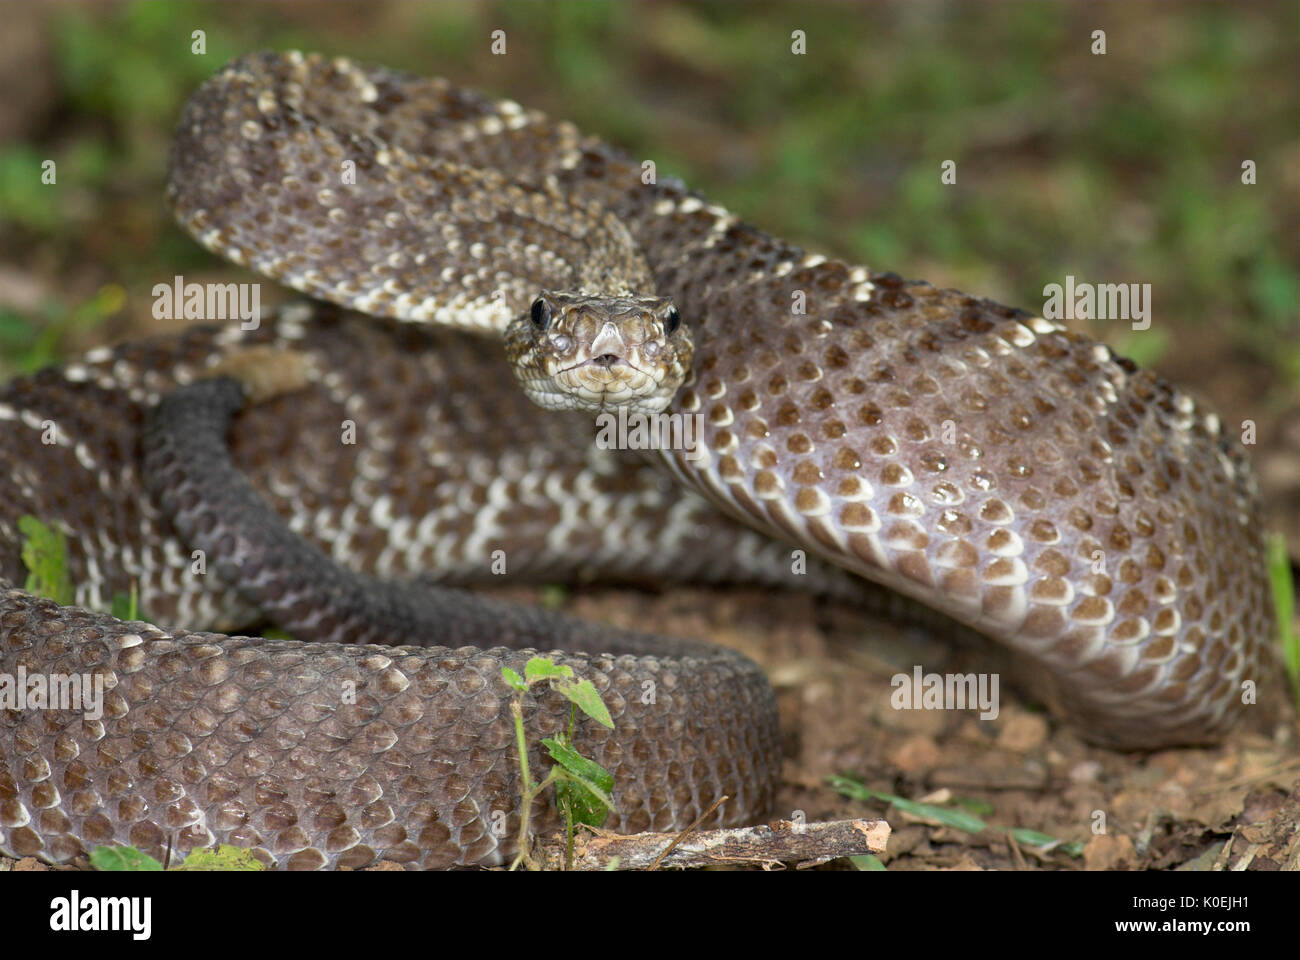 Uracoan Rattle Snake, Crotalus durissus vegrandis, found only in Venezuela in South America, defensive, aggressive pose, striking, noise, noisy, venem Stock Photo